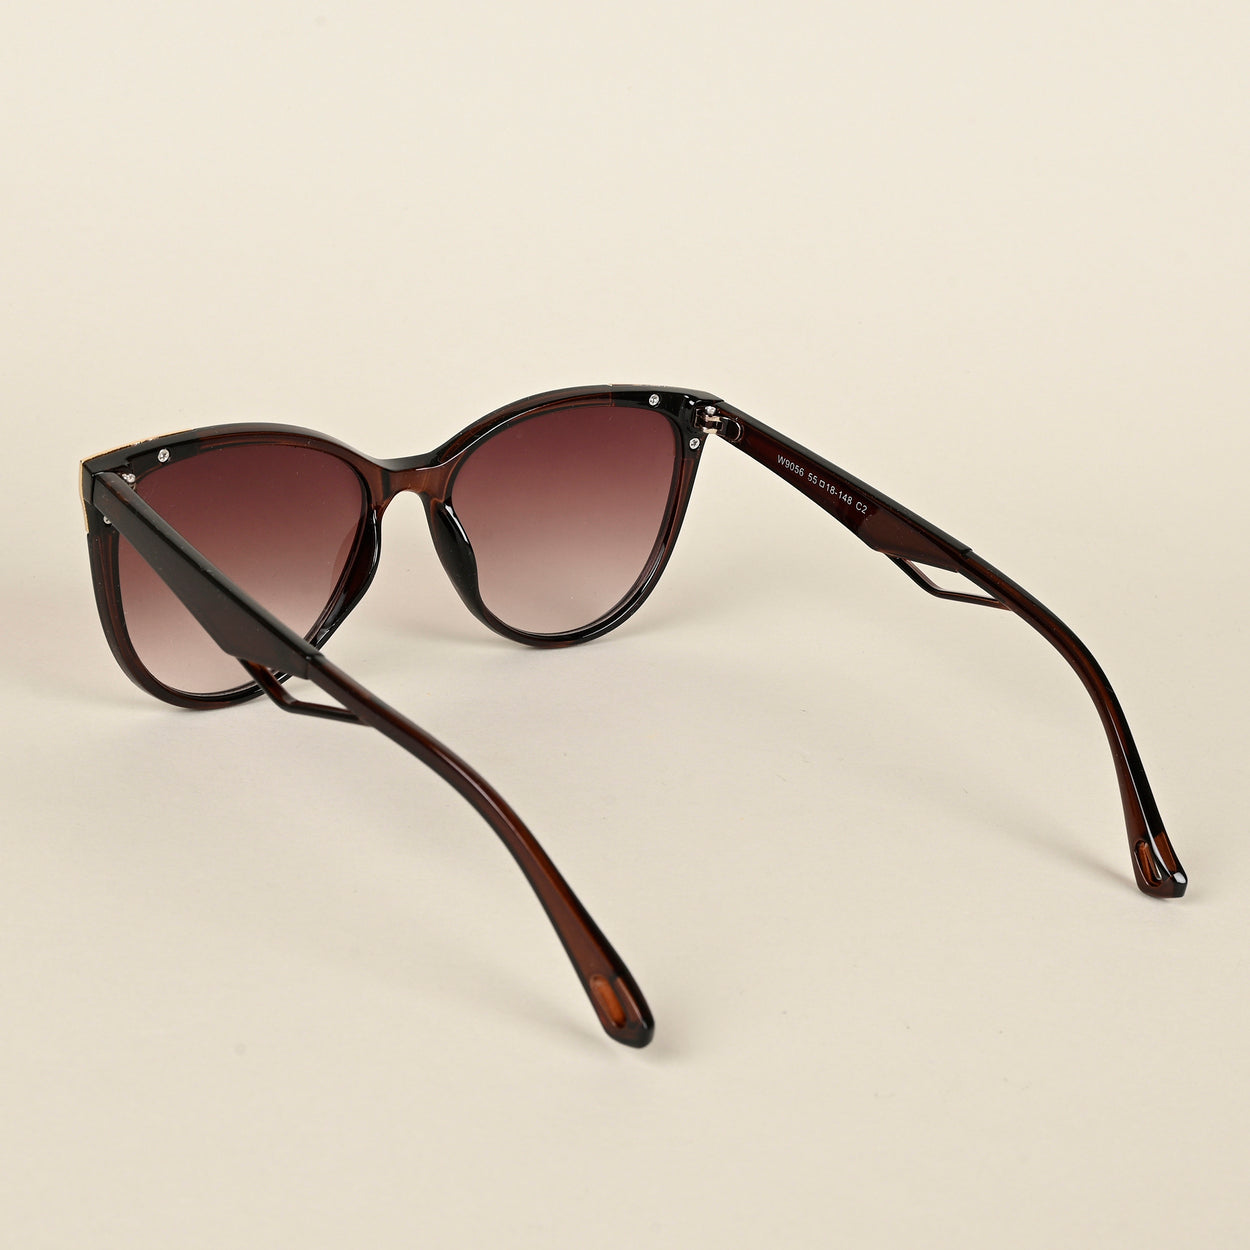 Voyage Brown Cateye Sunglasses for Women (W9056MG4229)